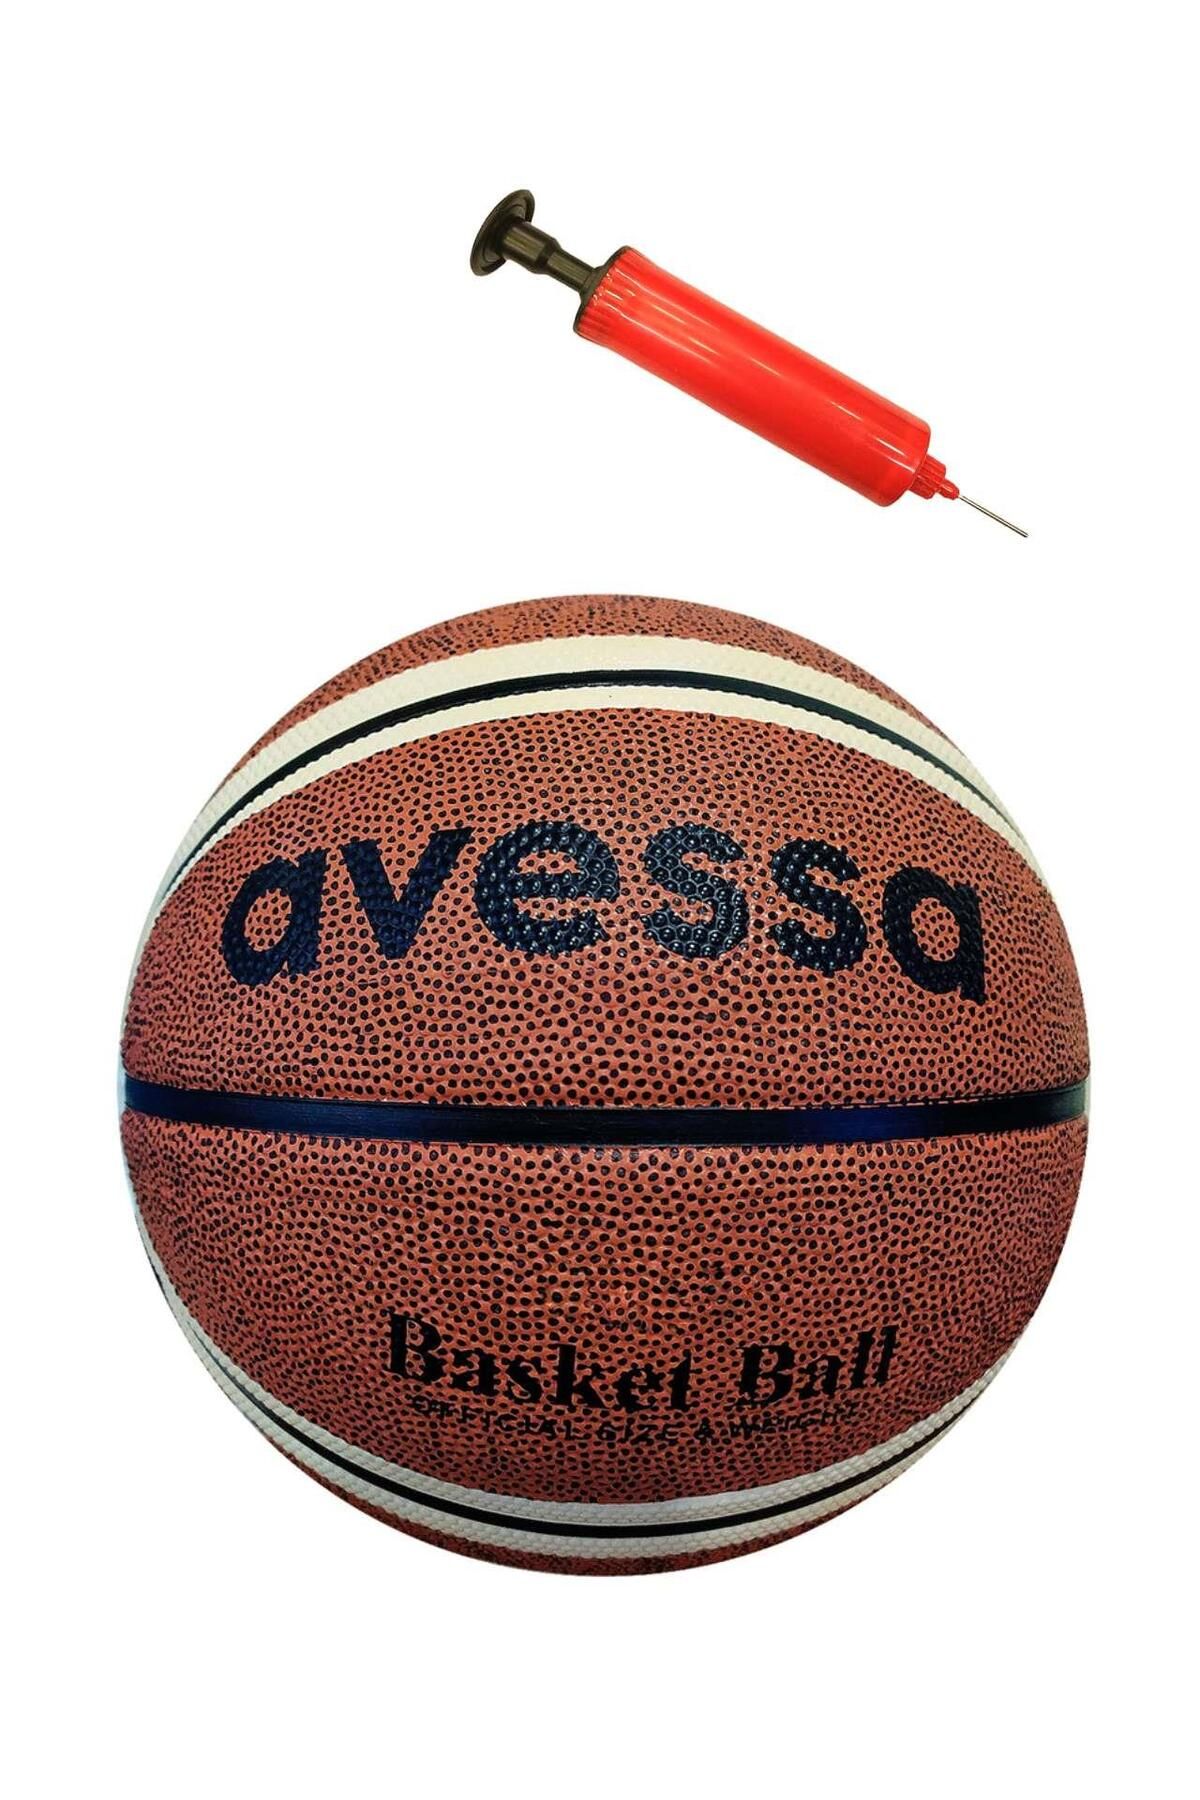 Avessa Bt-170 Basketbol Topu No7 Pompalı